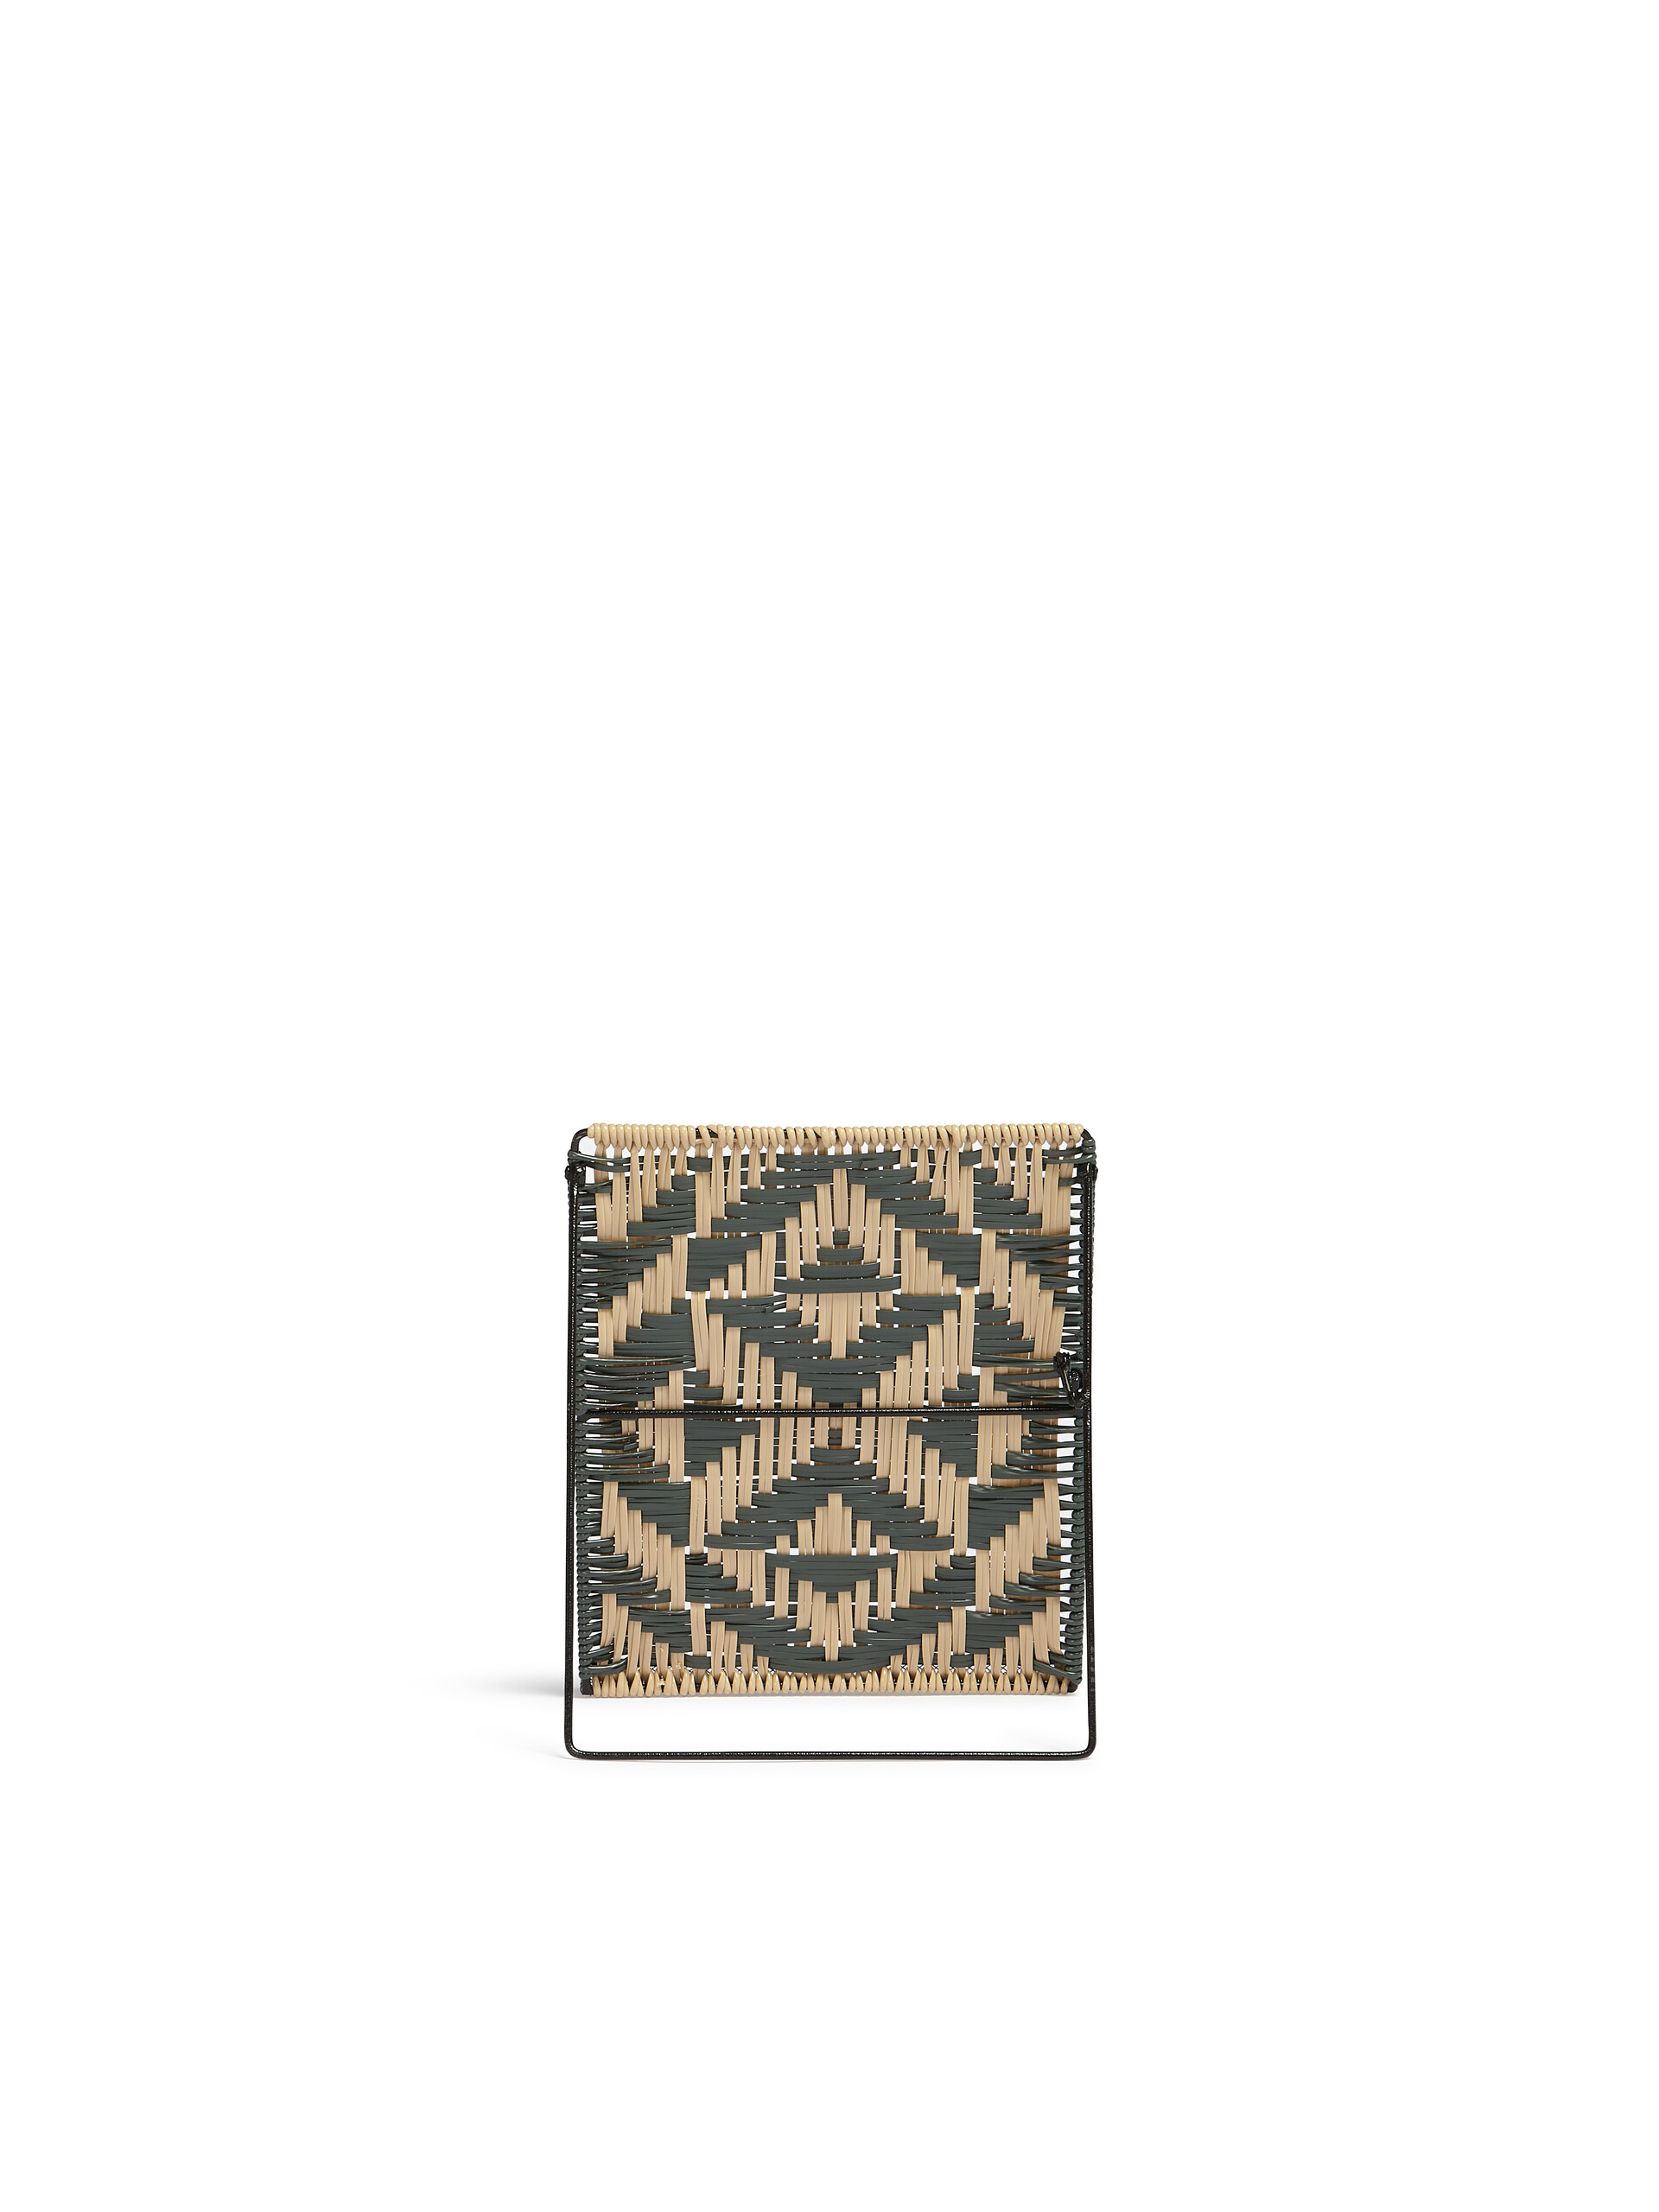 MARNI MARKET beige and black woven iPad stand - Furniture - Image 3